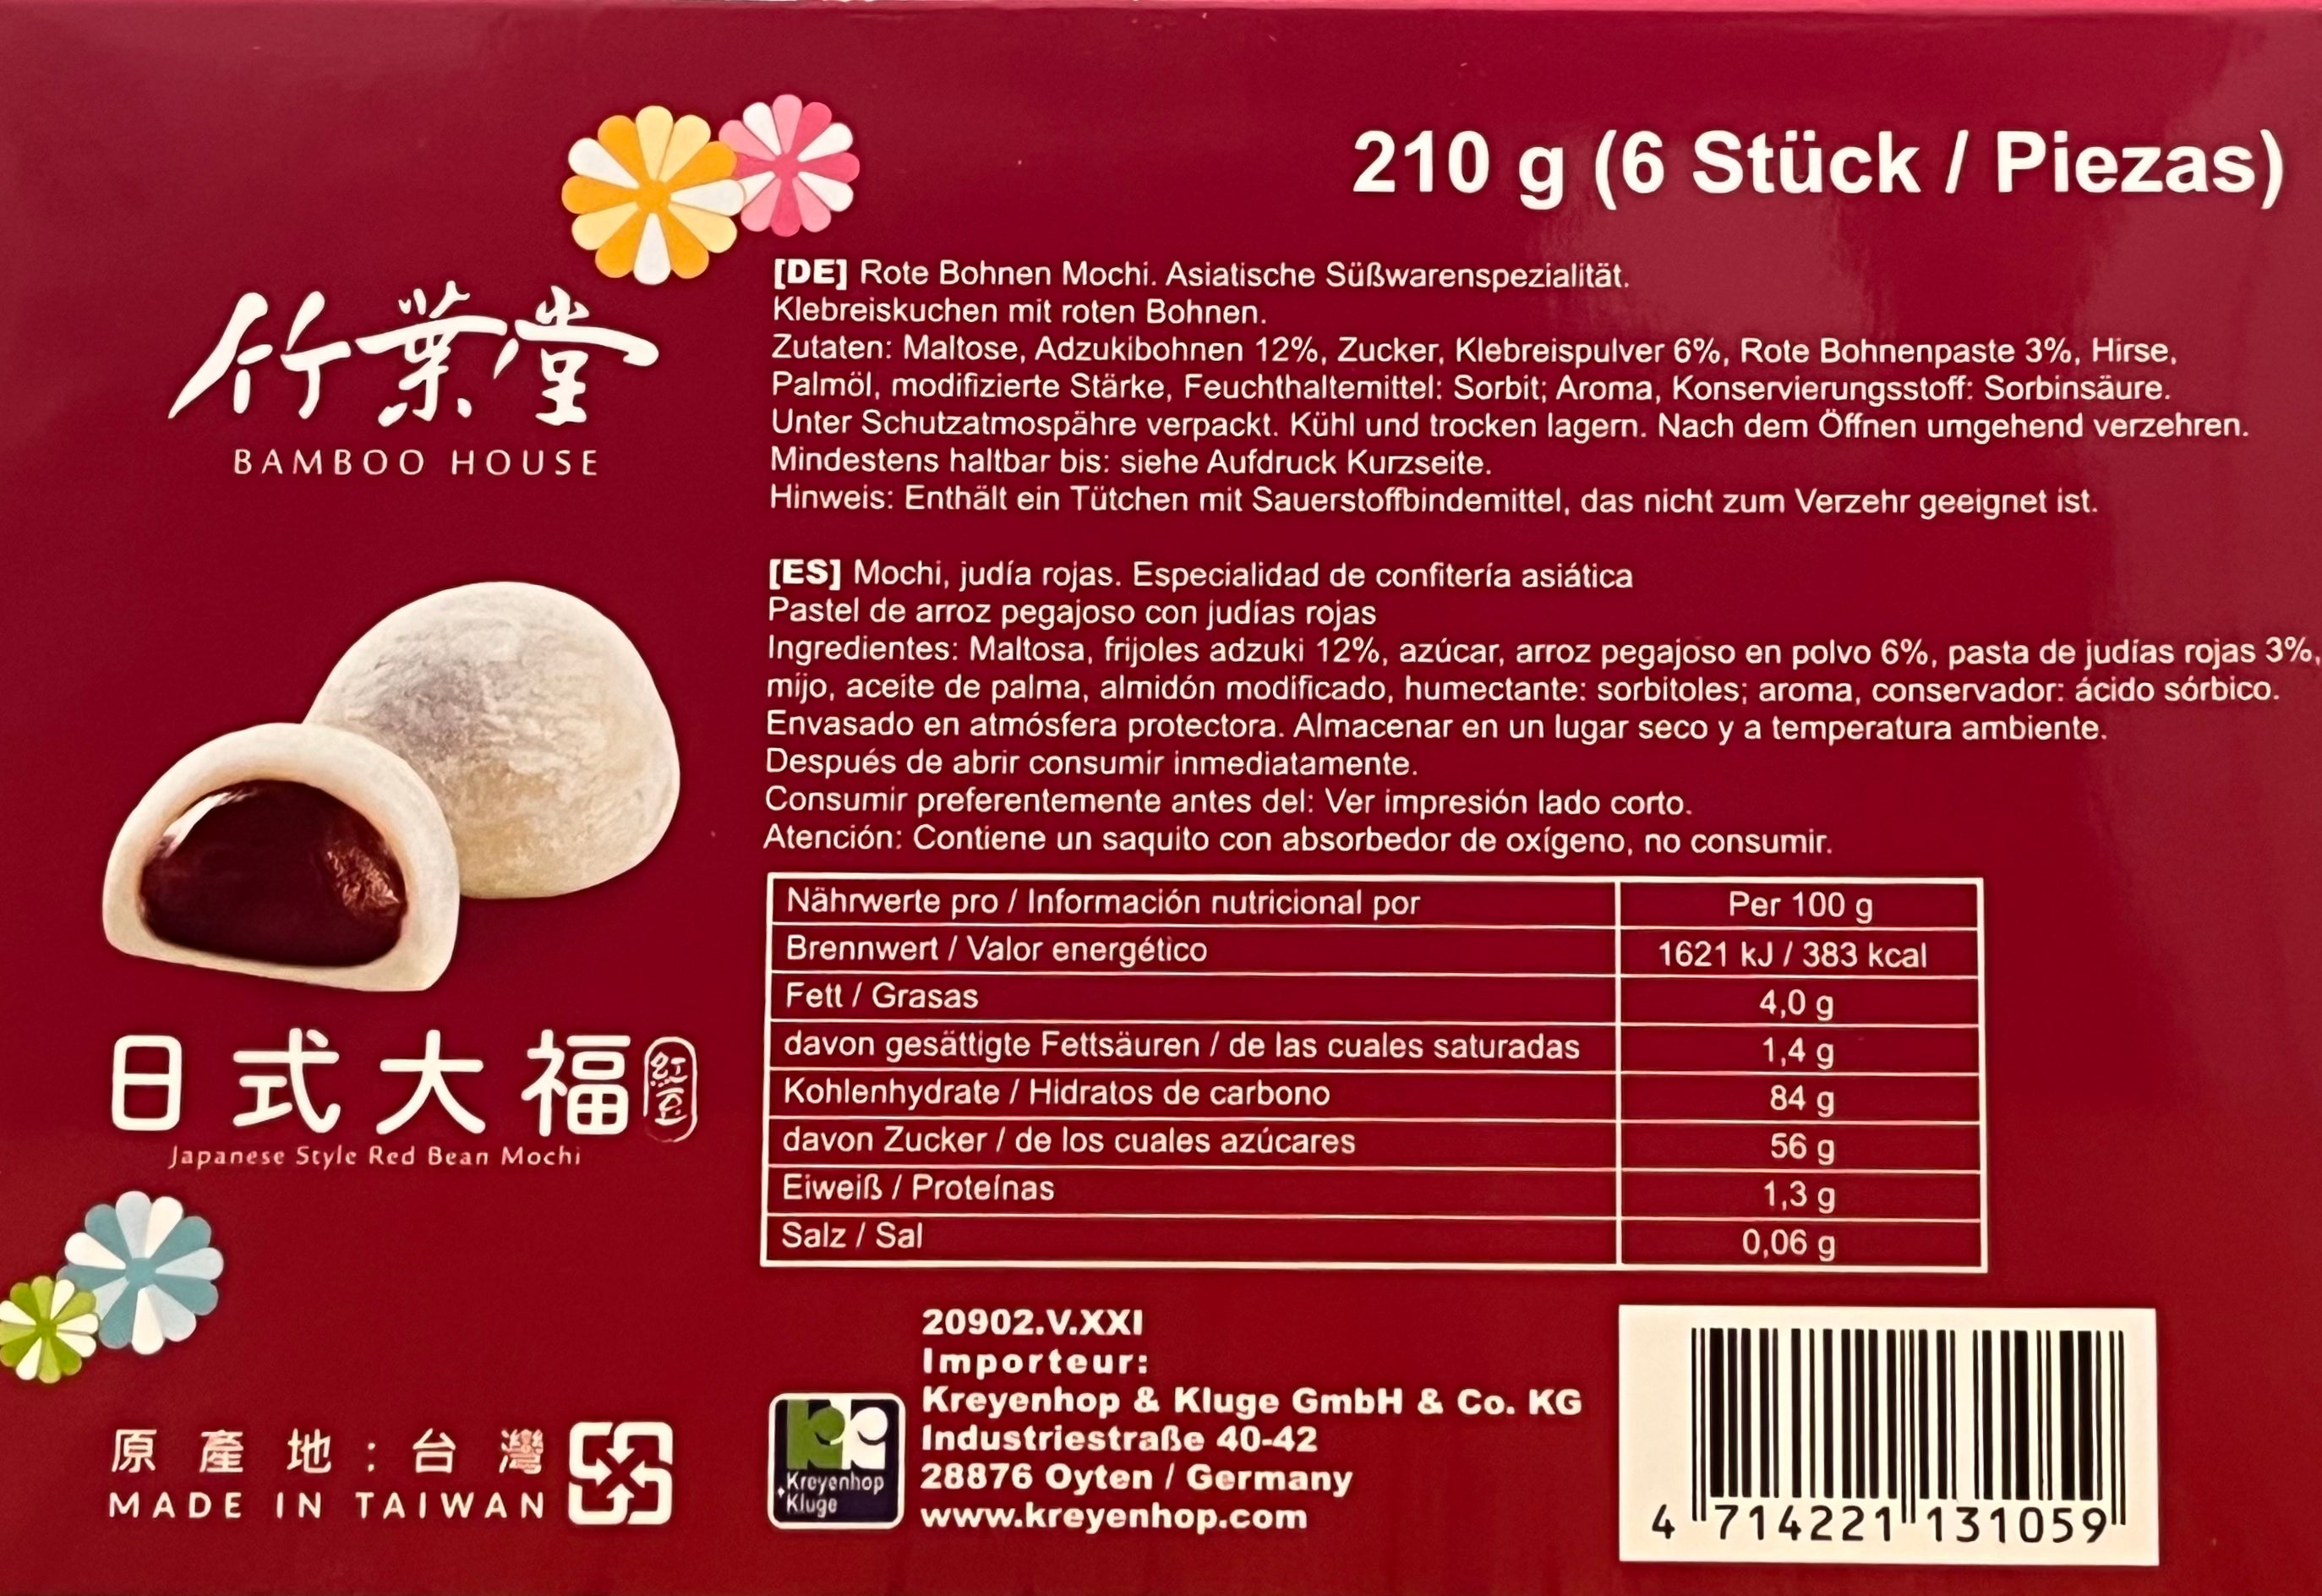 dinese red bean rote bohne mochi bamboohouse zutaten onlineshop asiashop asiatische lebensmittel